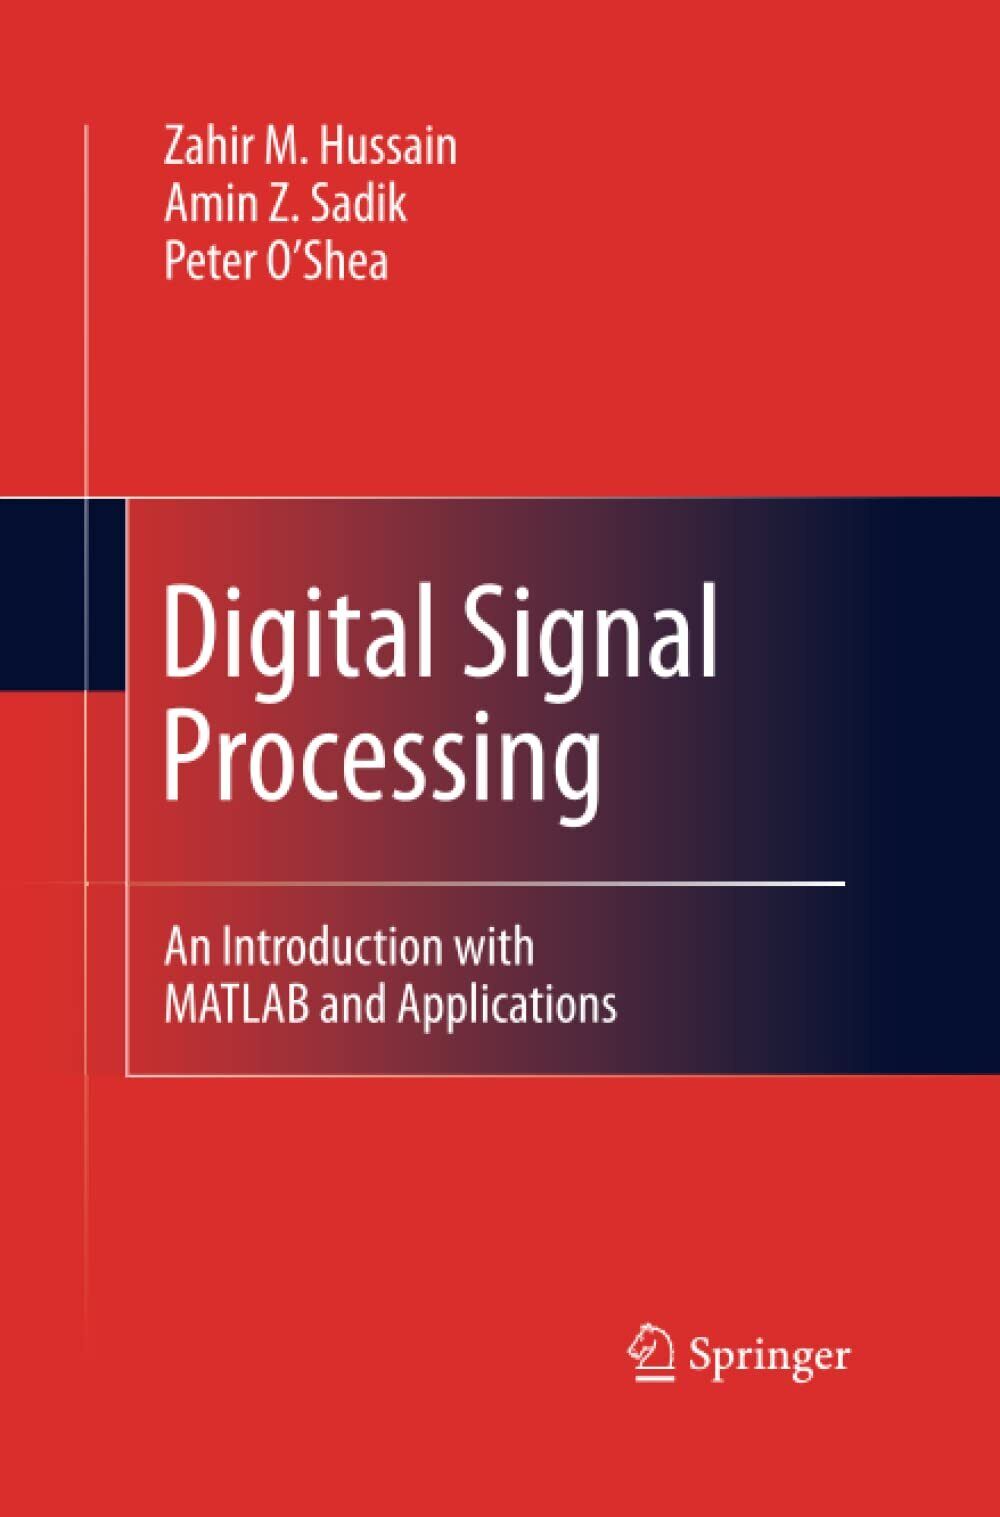 Digital Signal Processing - Zahir M. Hussain, Peter O'Shea, Amin Z. Sadik - 2014